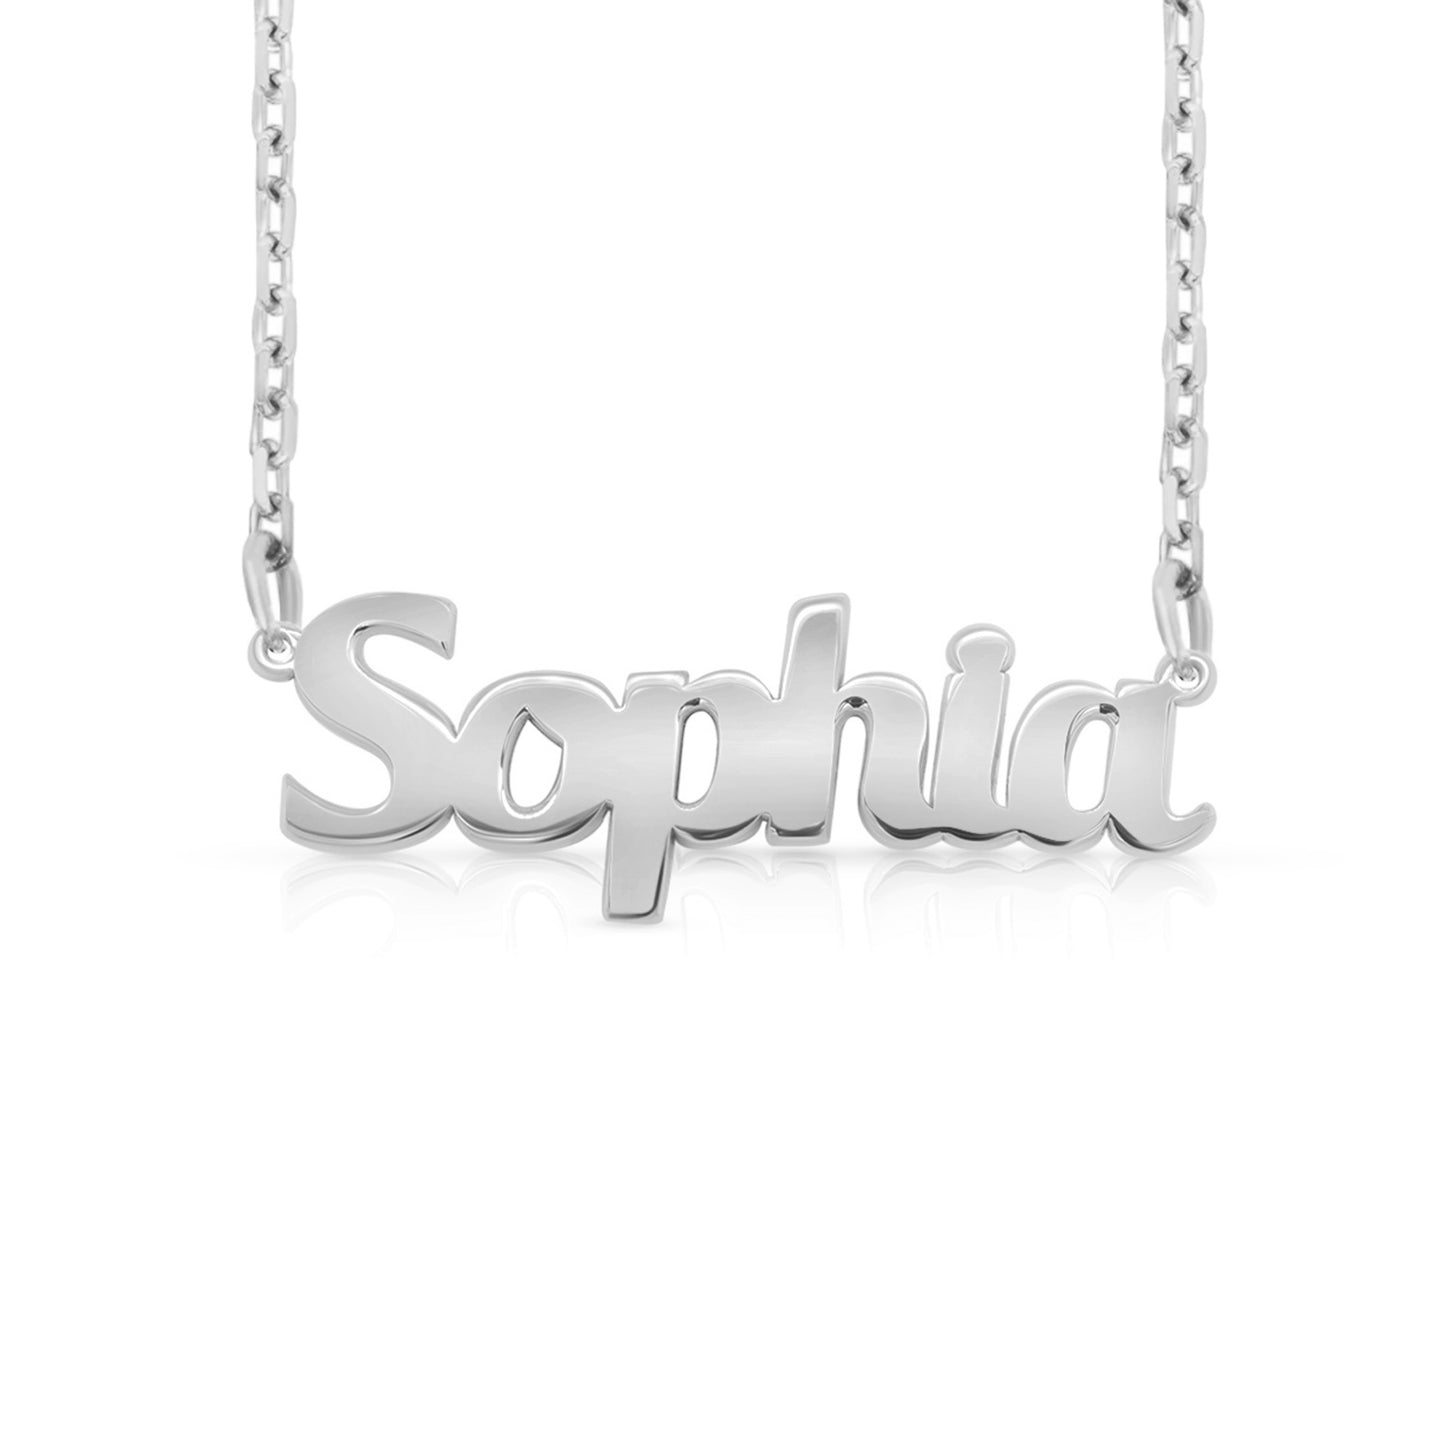 14 Karat "Sophia" Style Nameplate